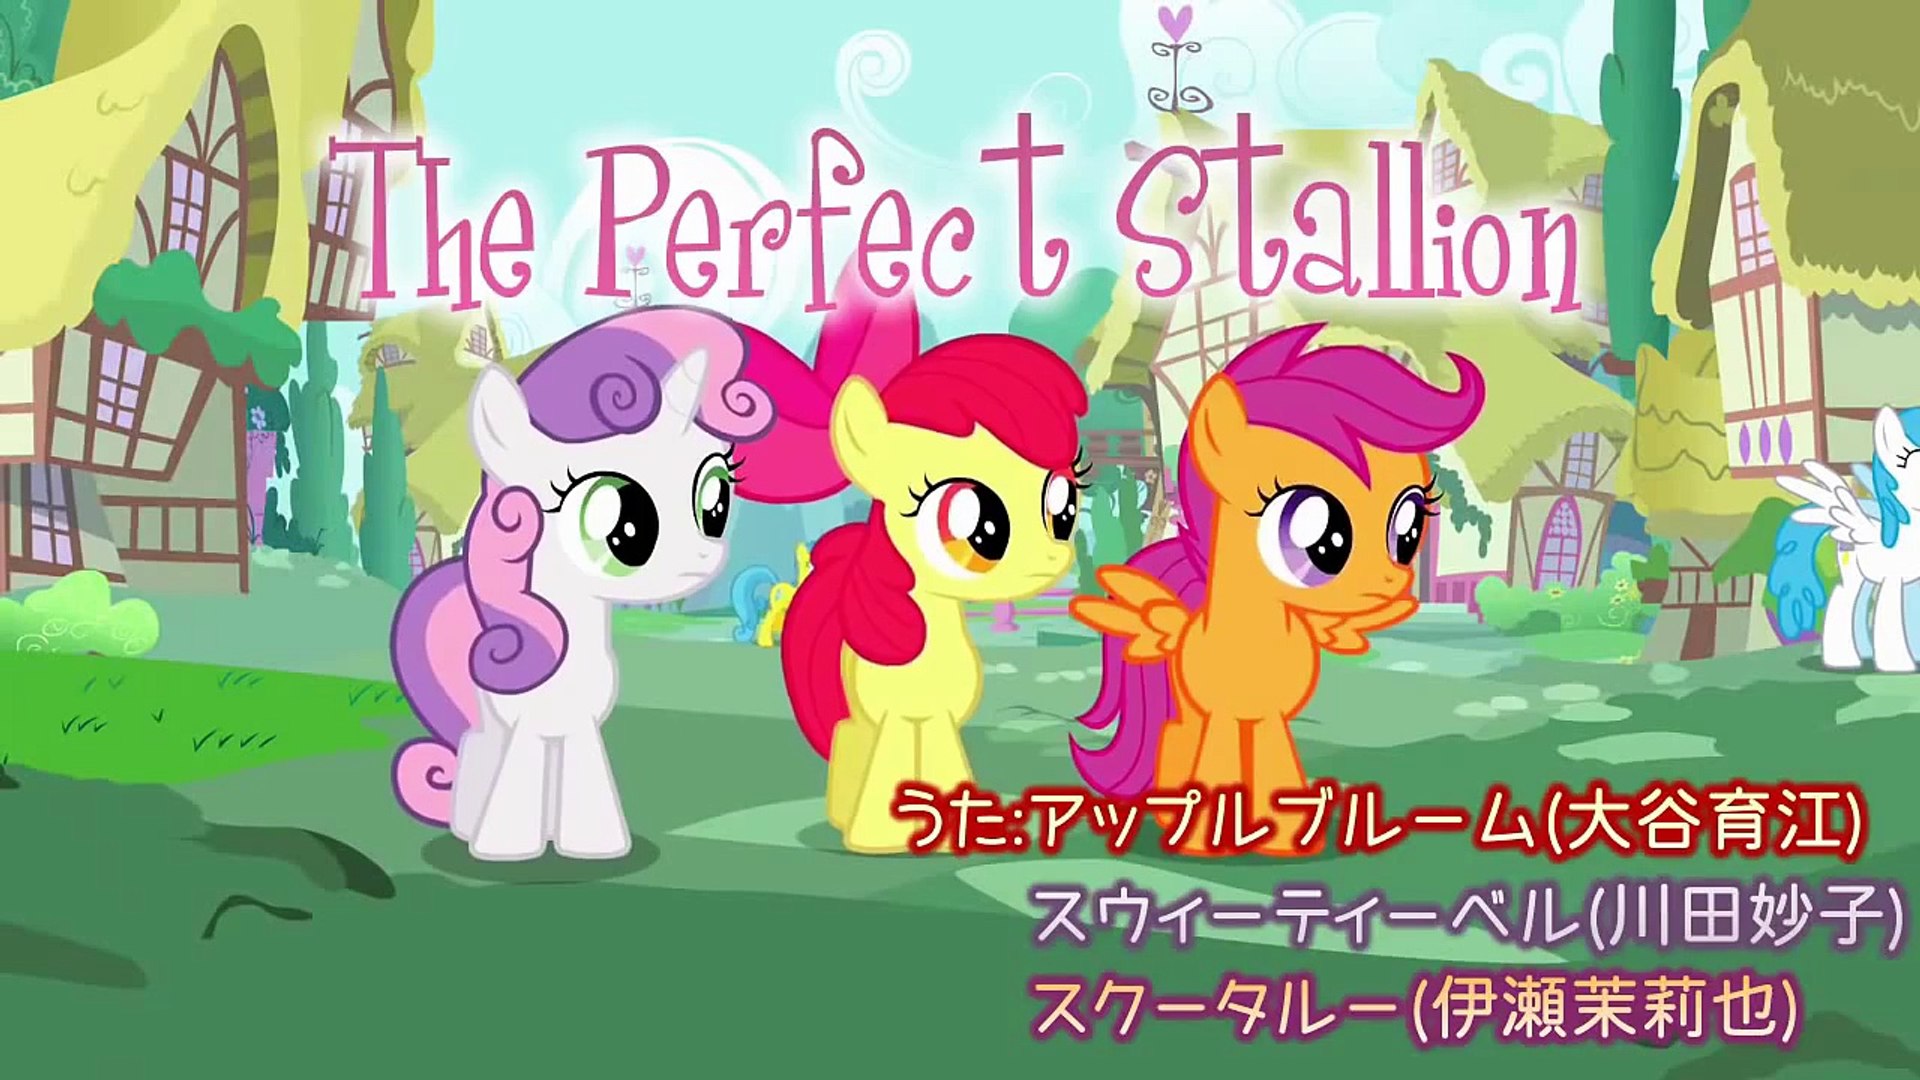 Japanese The Perfect Stallion My Little Pony Fim S2e17 Lyrics Video Dailymotion